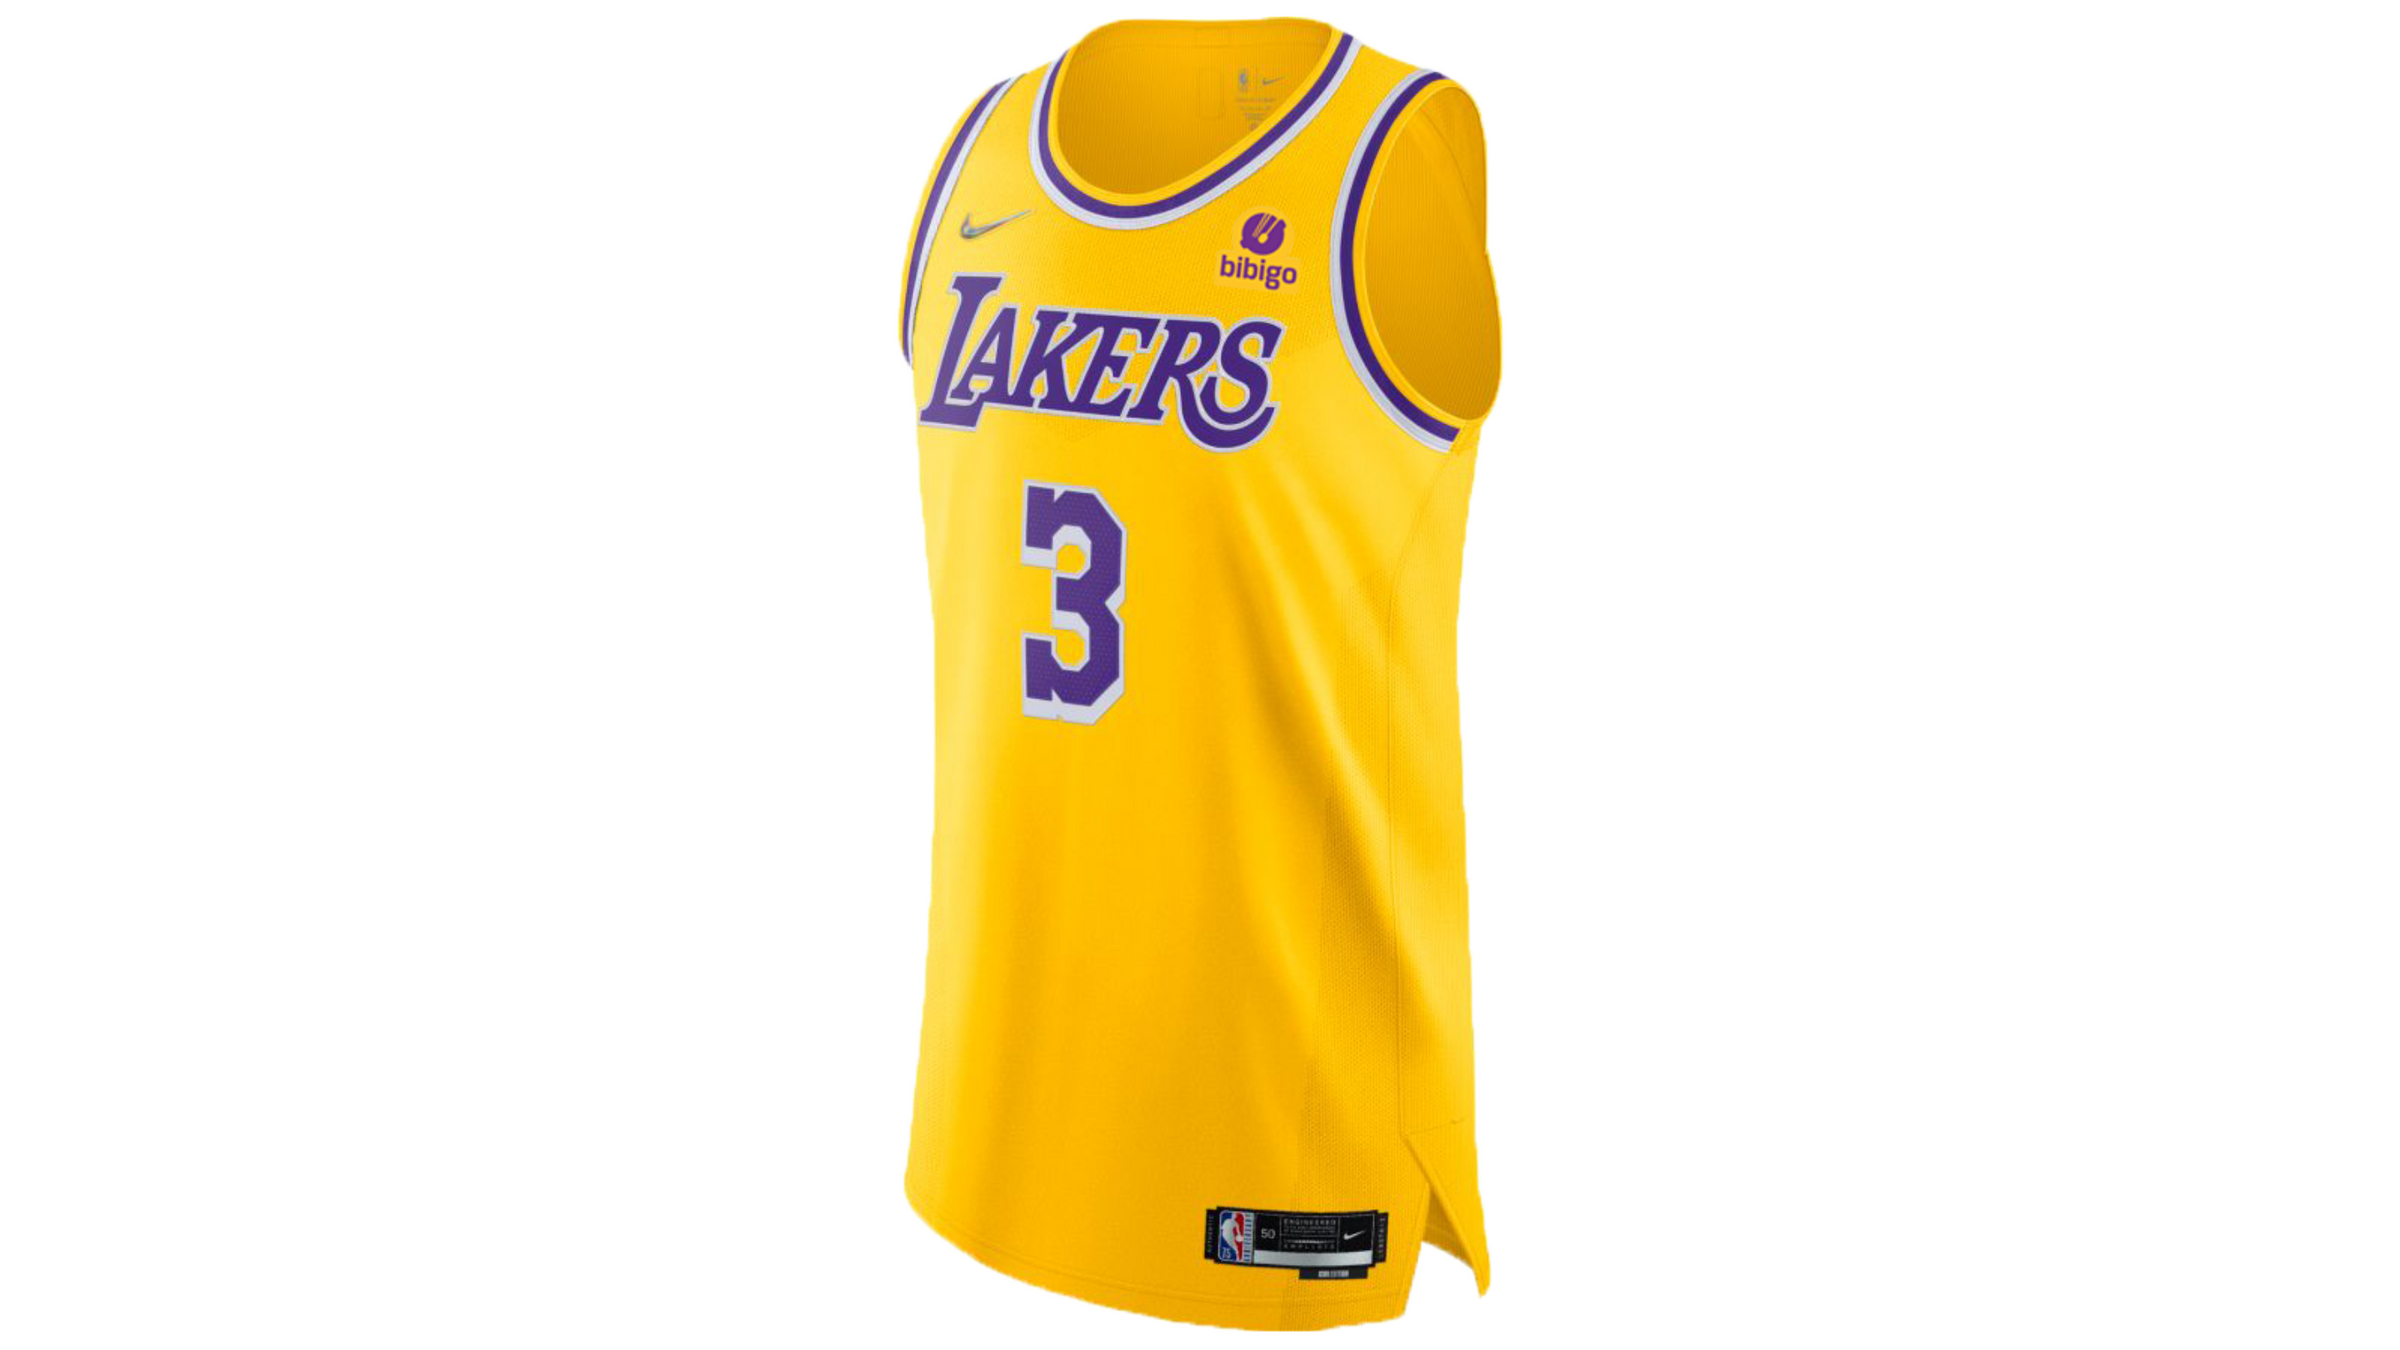 NBA store begins selling LeBron James Lakers gear - Silver Screen